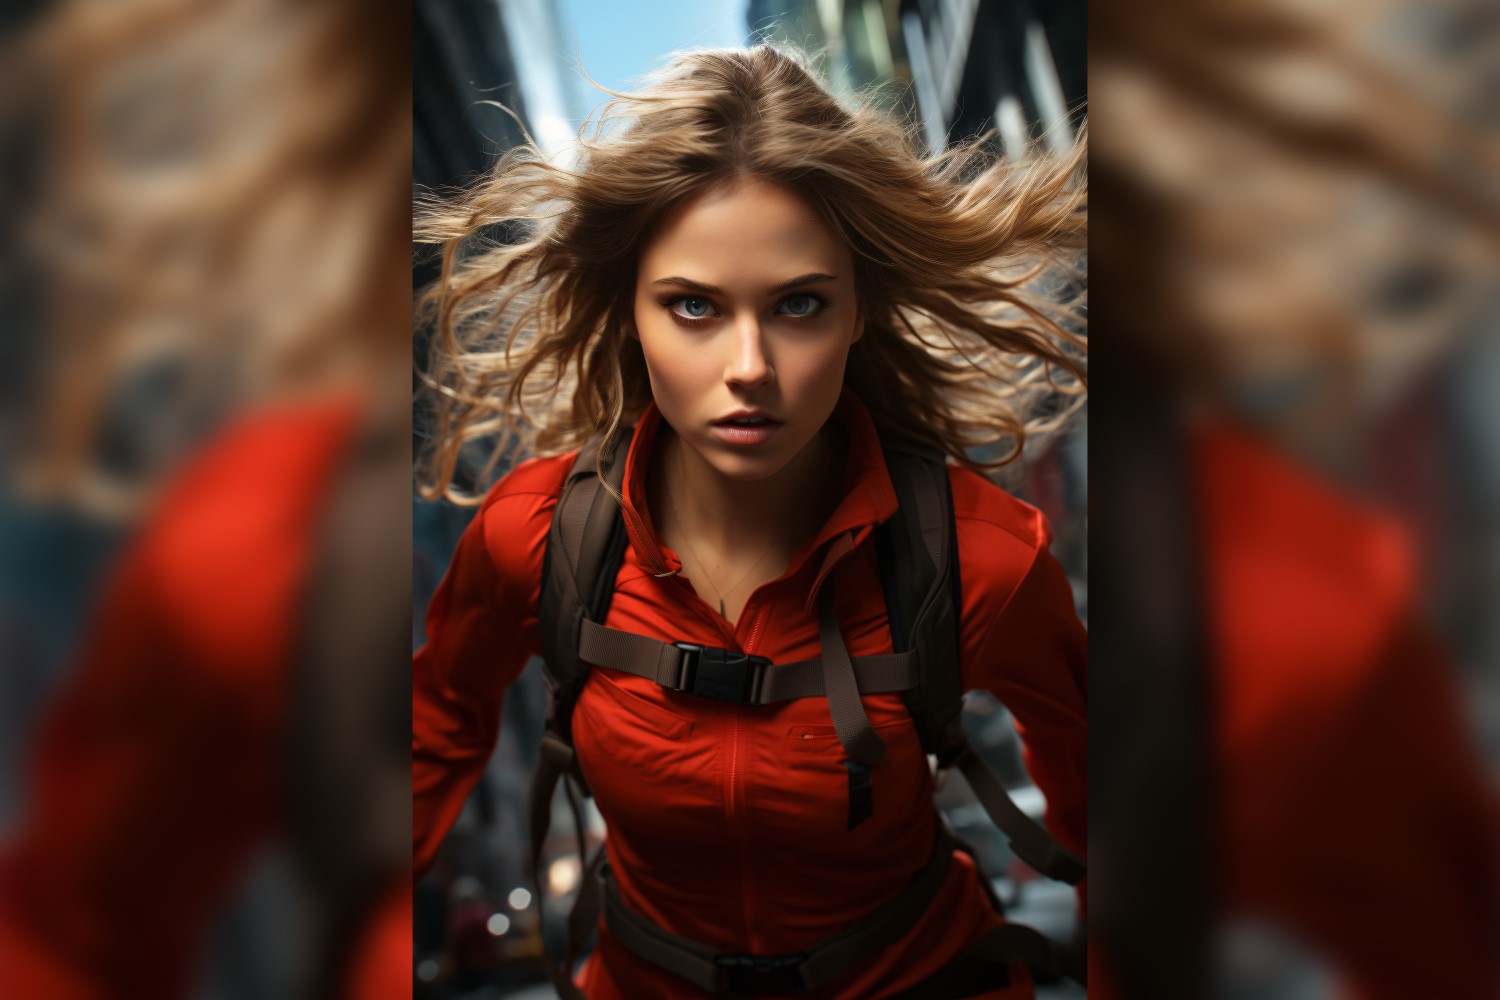 female superhero wearing red dress and running city street 10